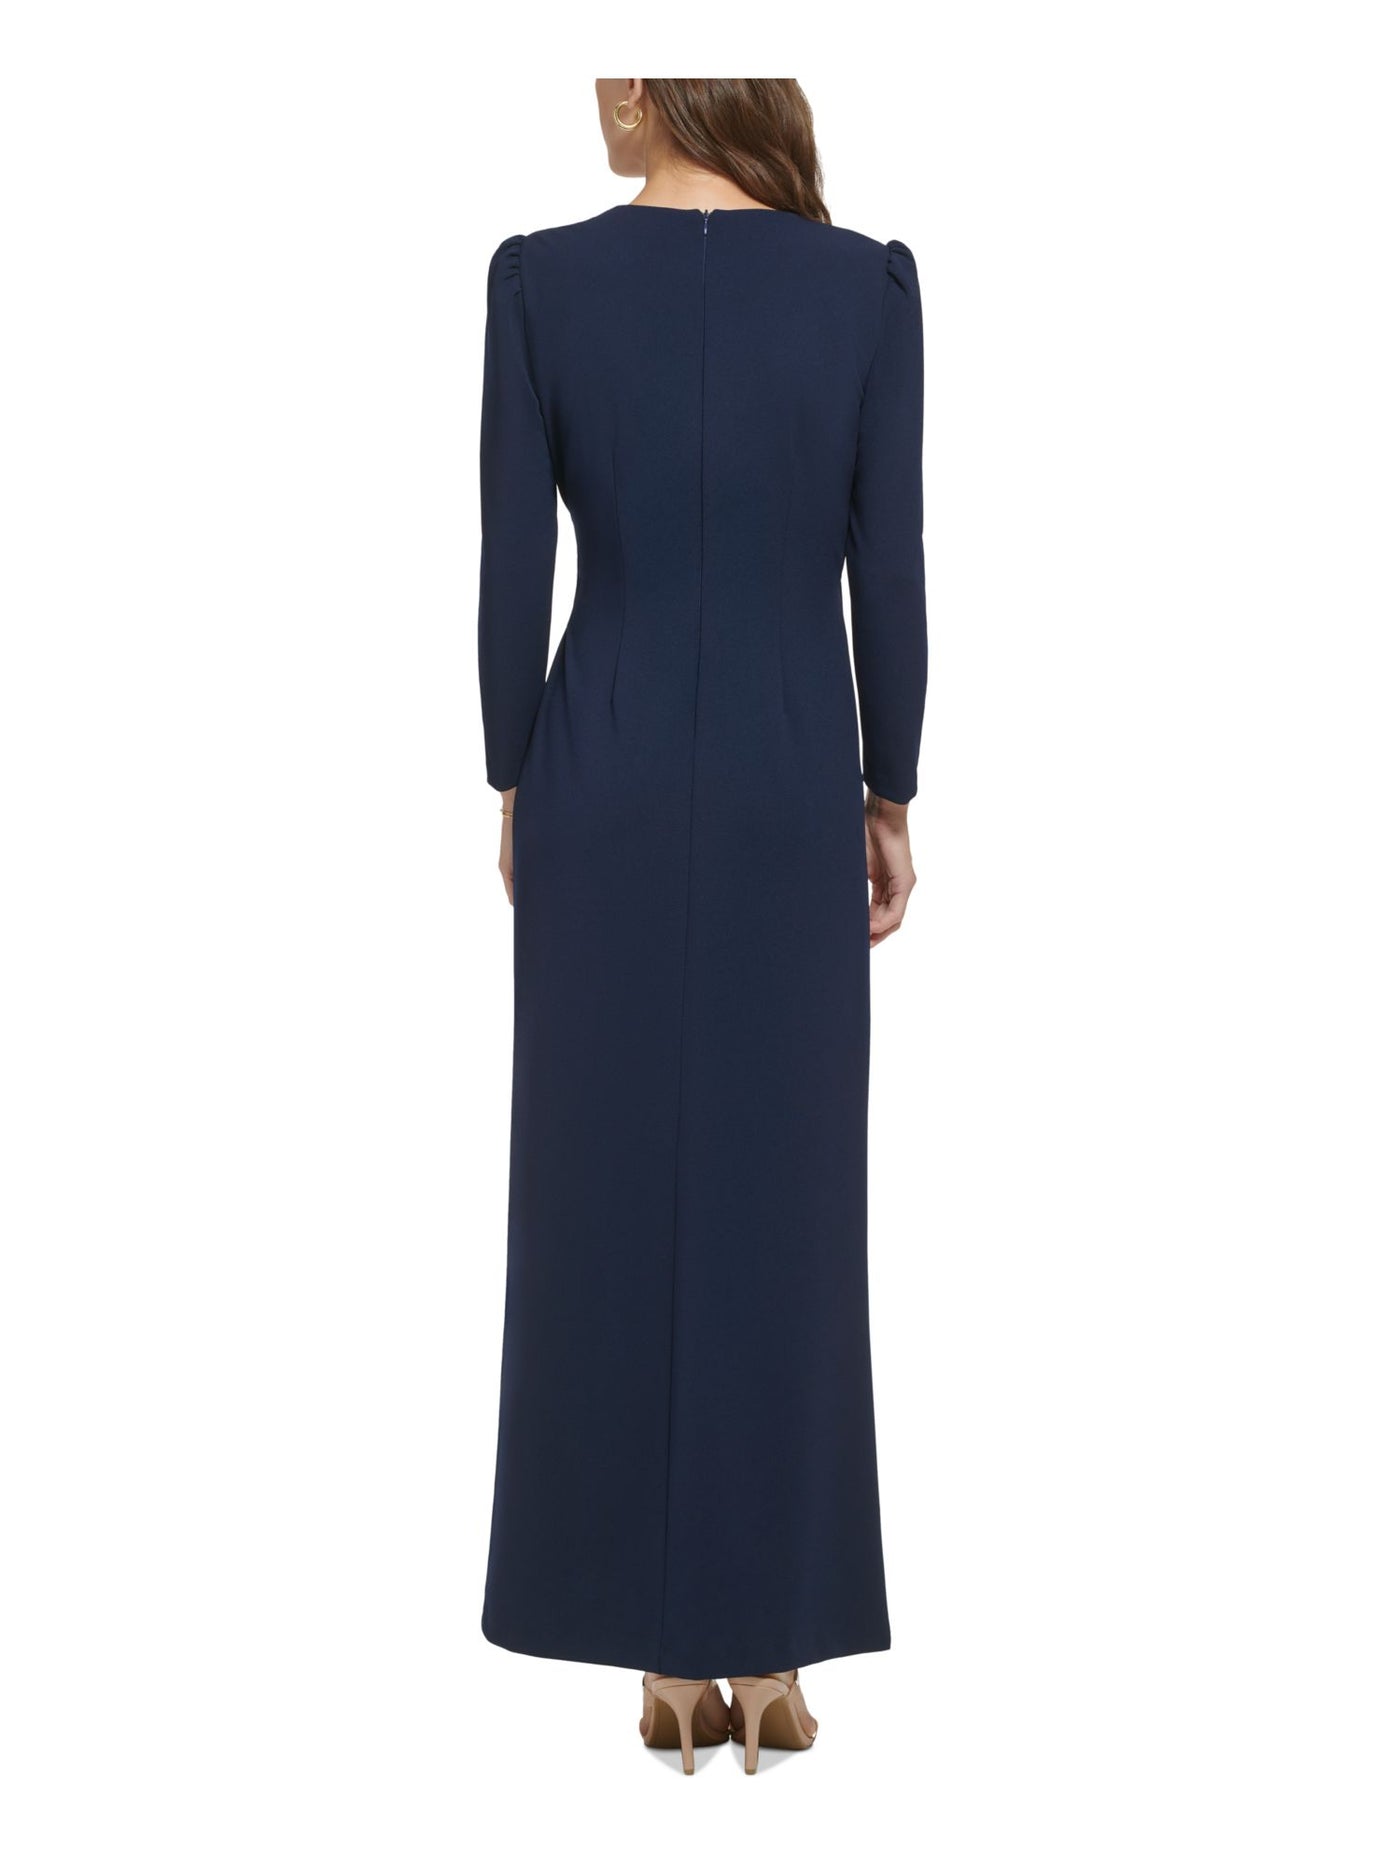 DKNY Womens Navy Twist Front Zippered Long Sleeve Surplice Neckline Maxi Evening Faux Wrap Dress 8